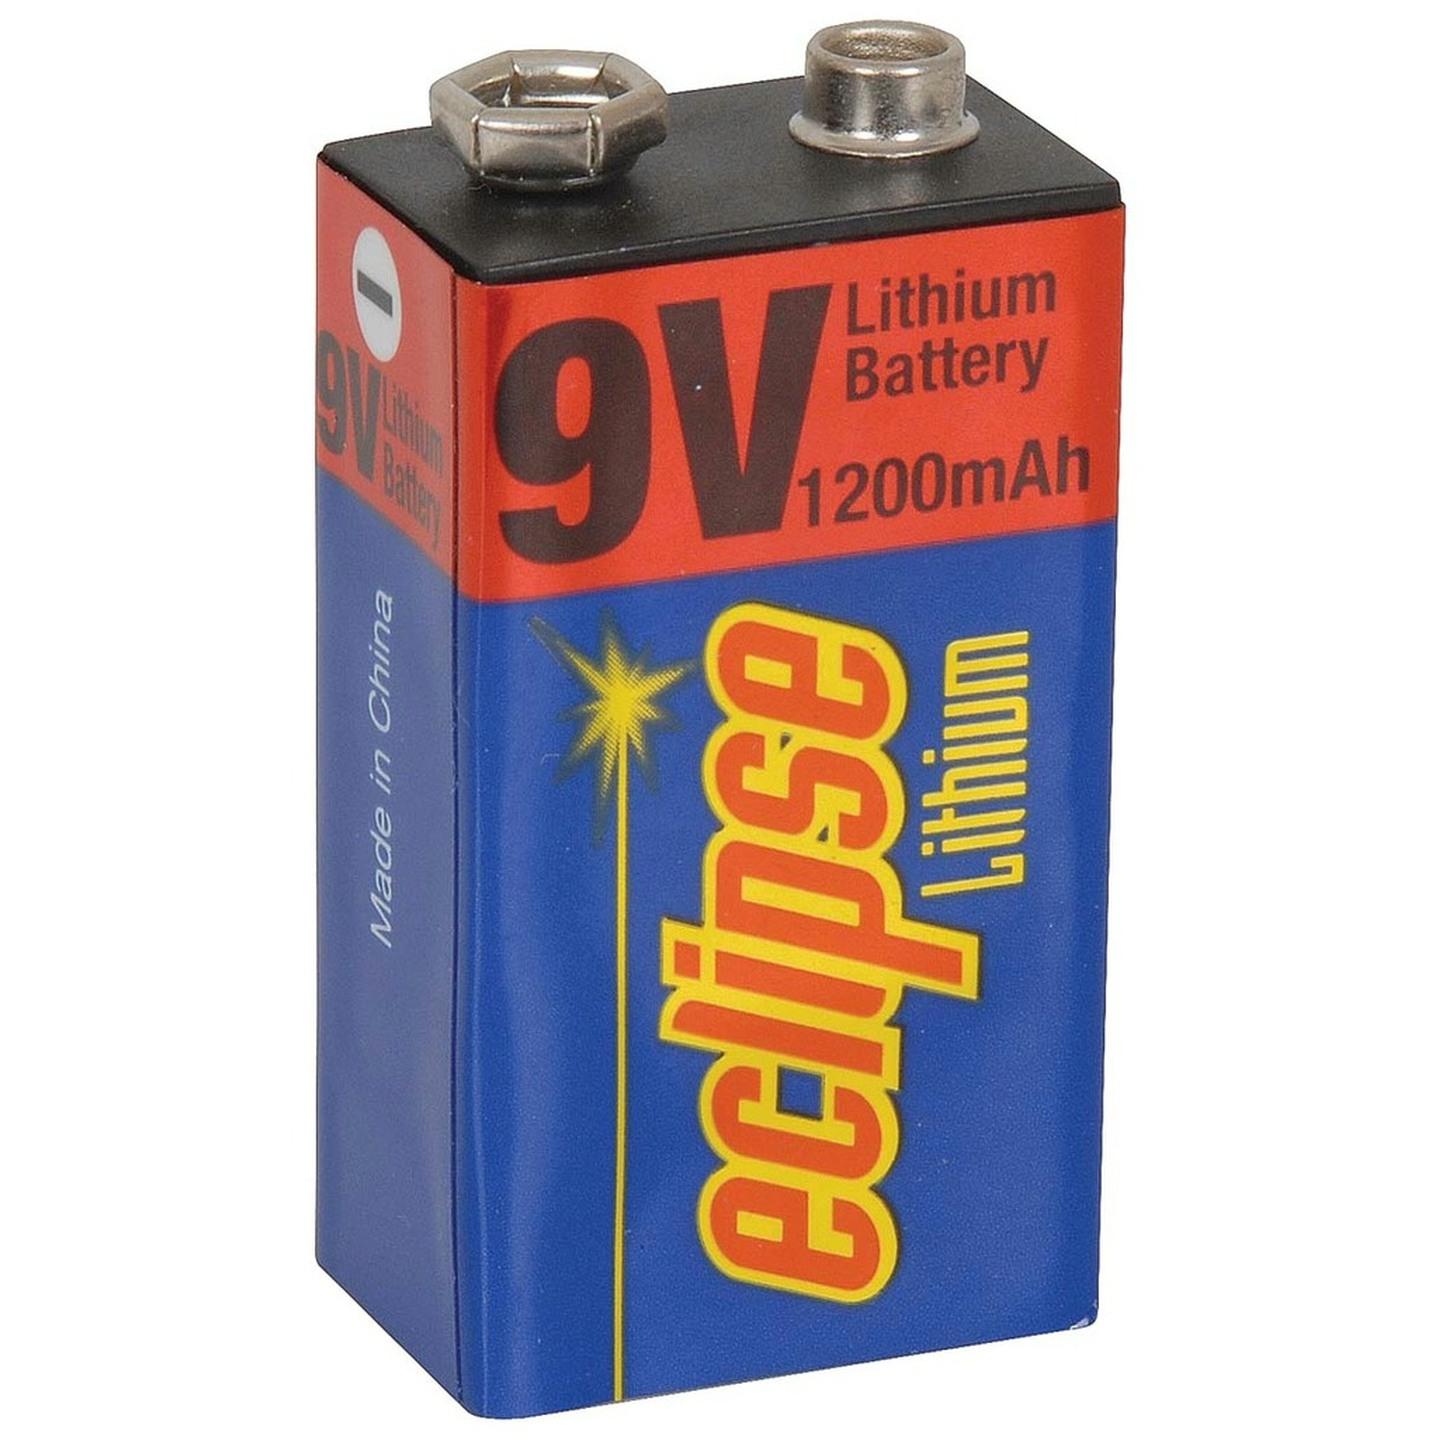 Eclipse 9V Lithium Battery